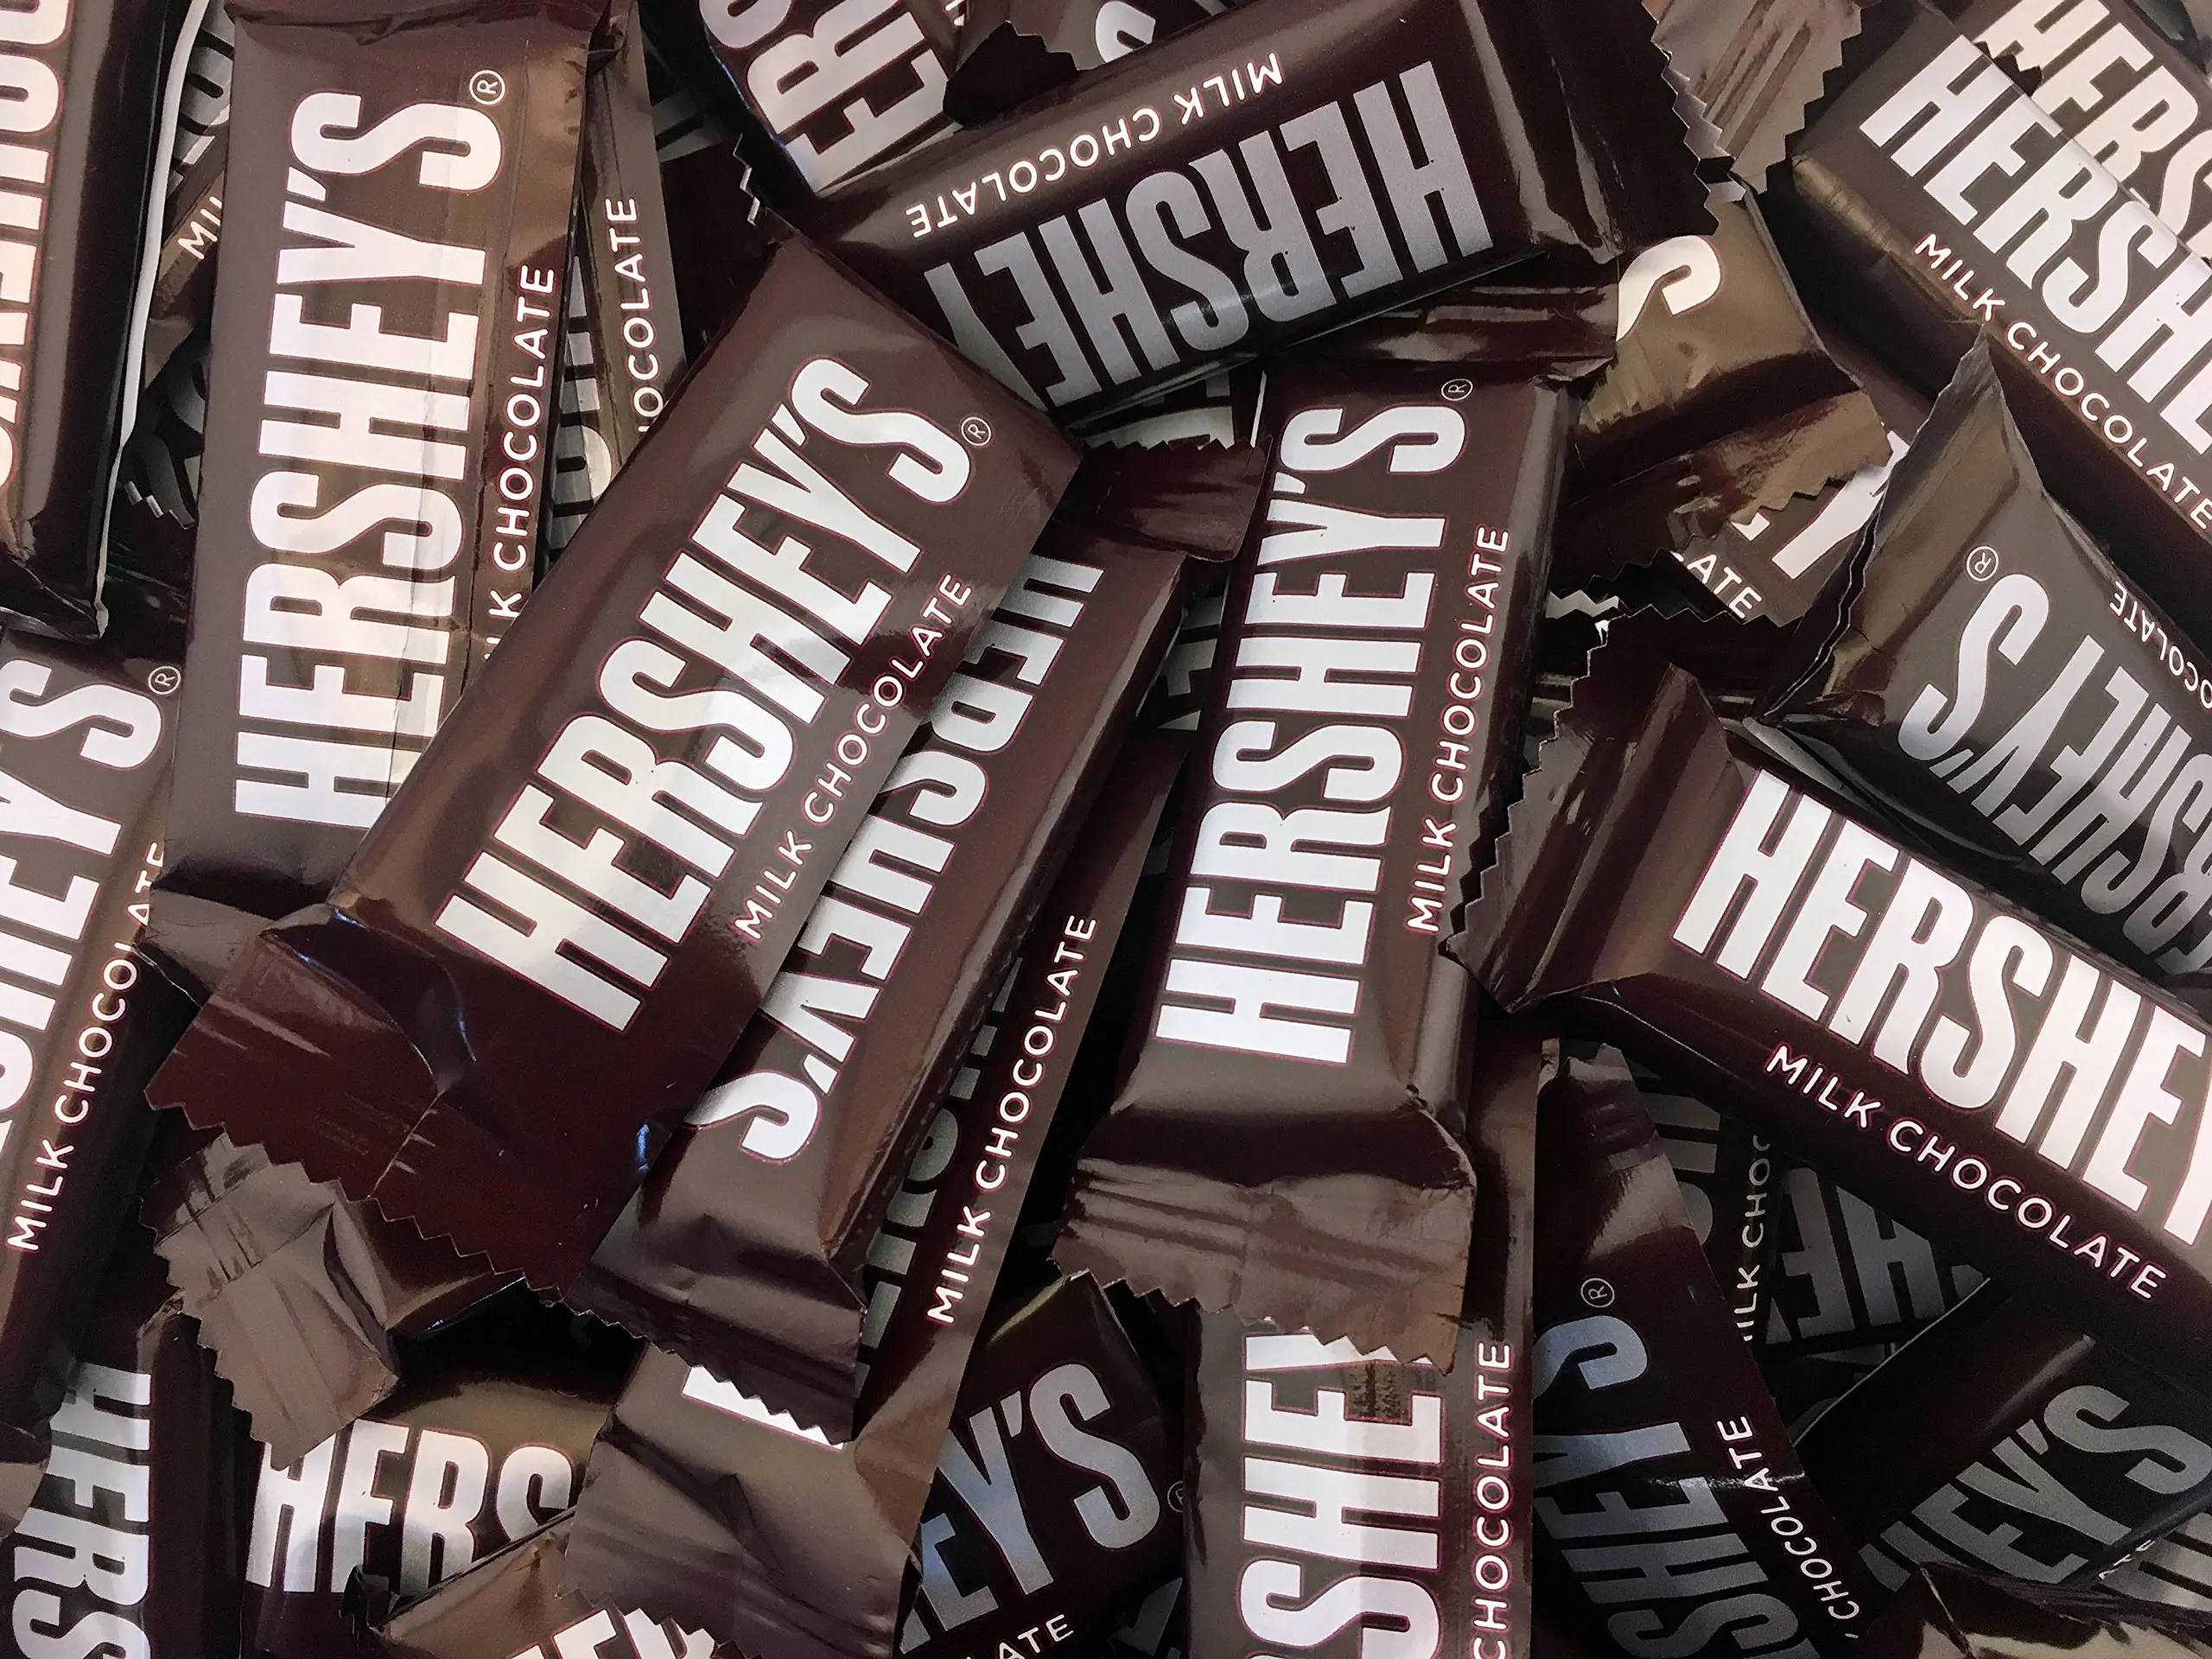 The hershey company. Шоколад американский Хершес. Hershey’s в Херши. Батончик Hershey s. Херши шоколад батончик.